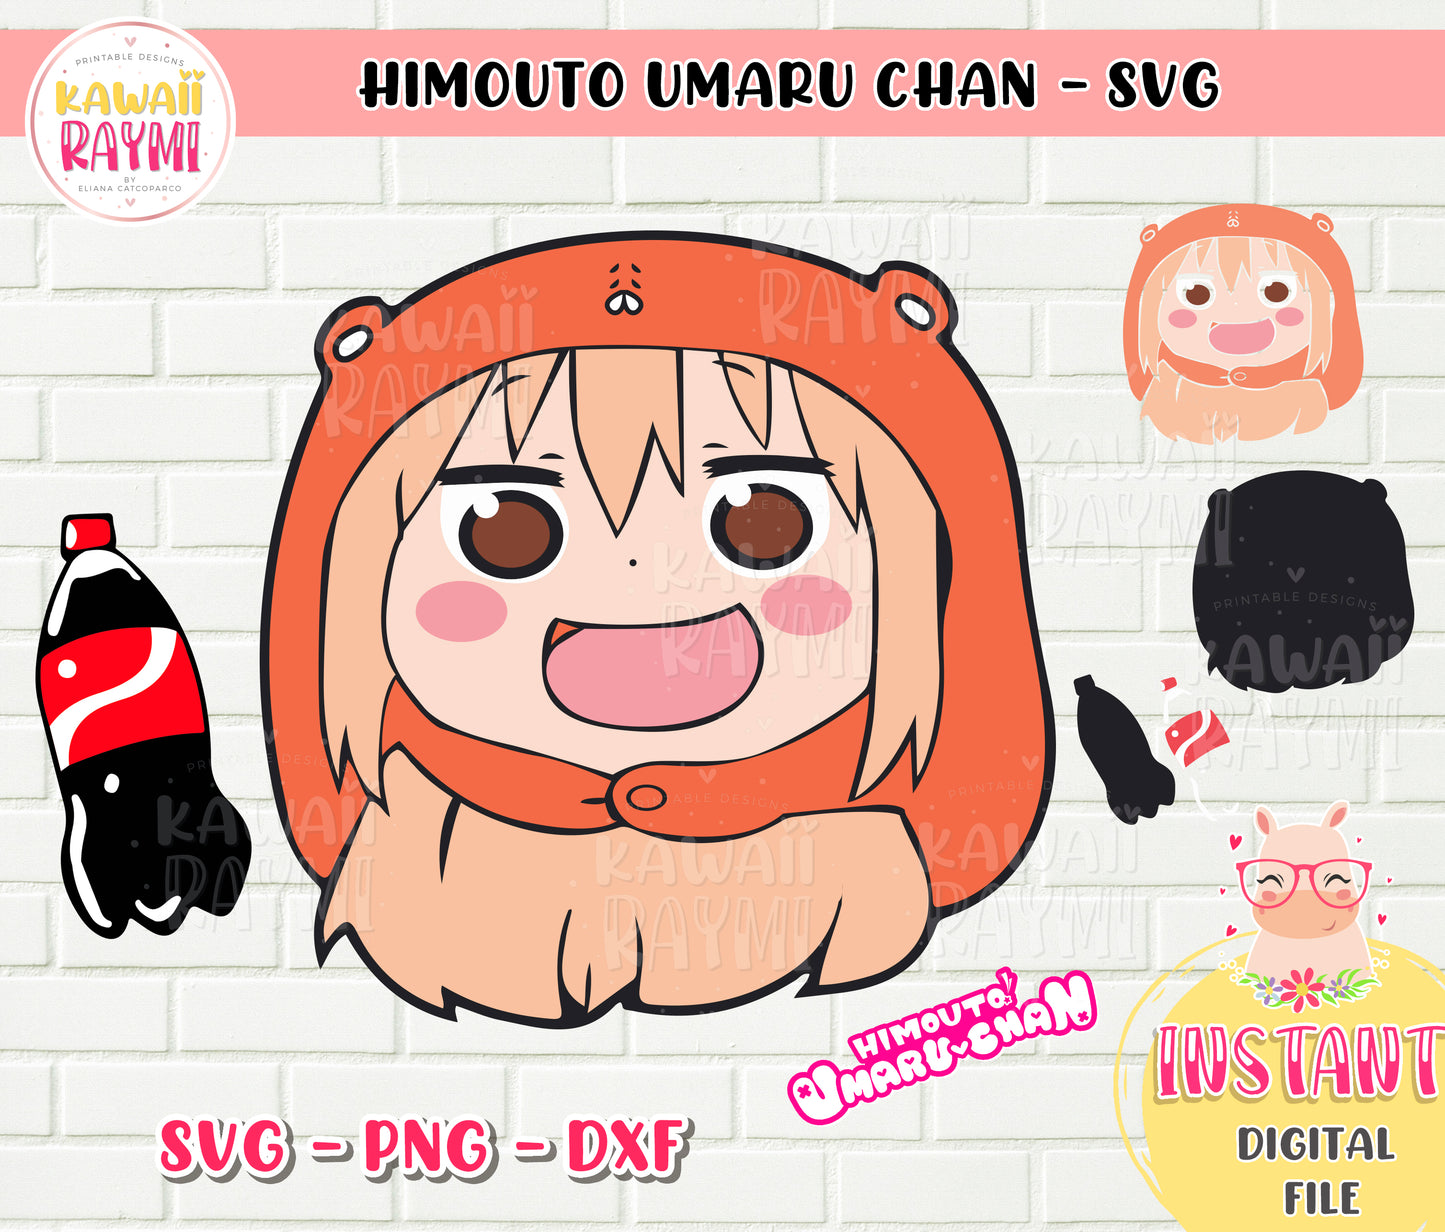 Himouto Umaru chan - Cola-SVG -Digital file- CRICUT - IN LAYERED